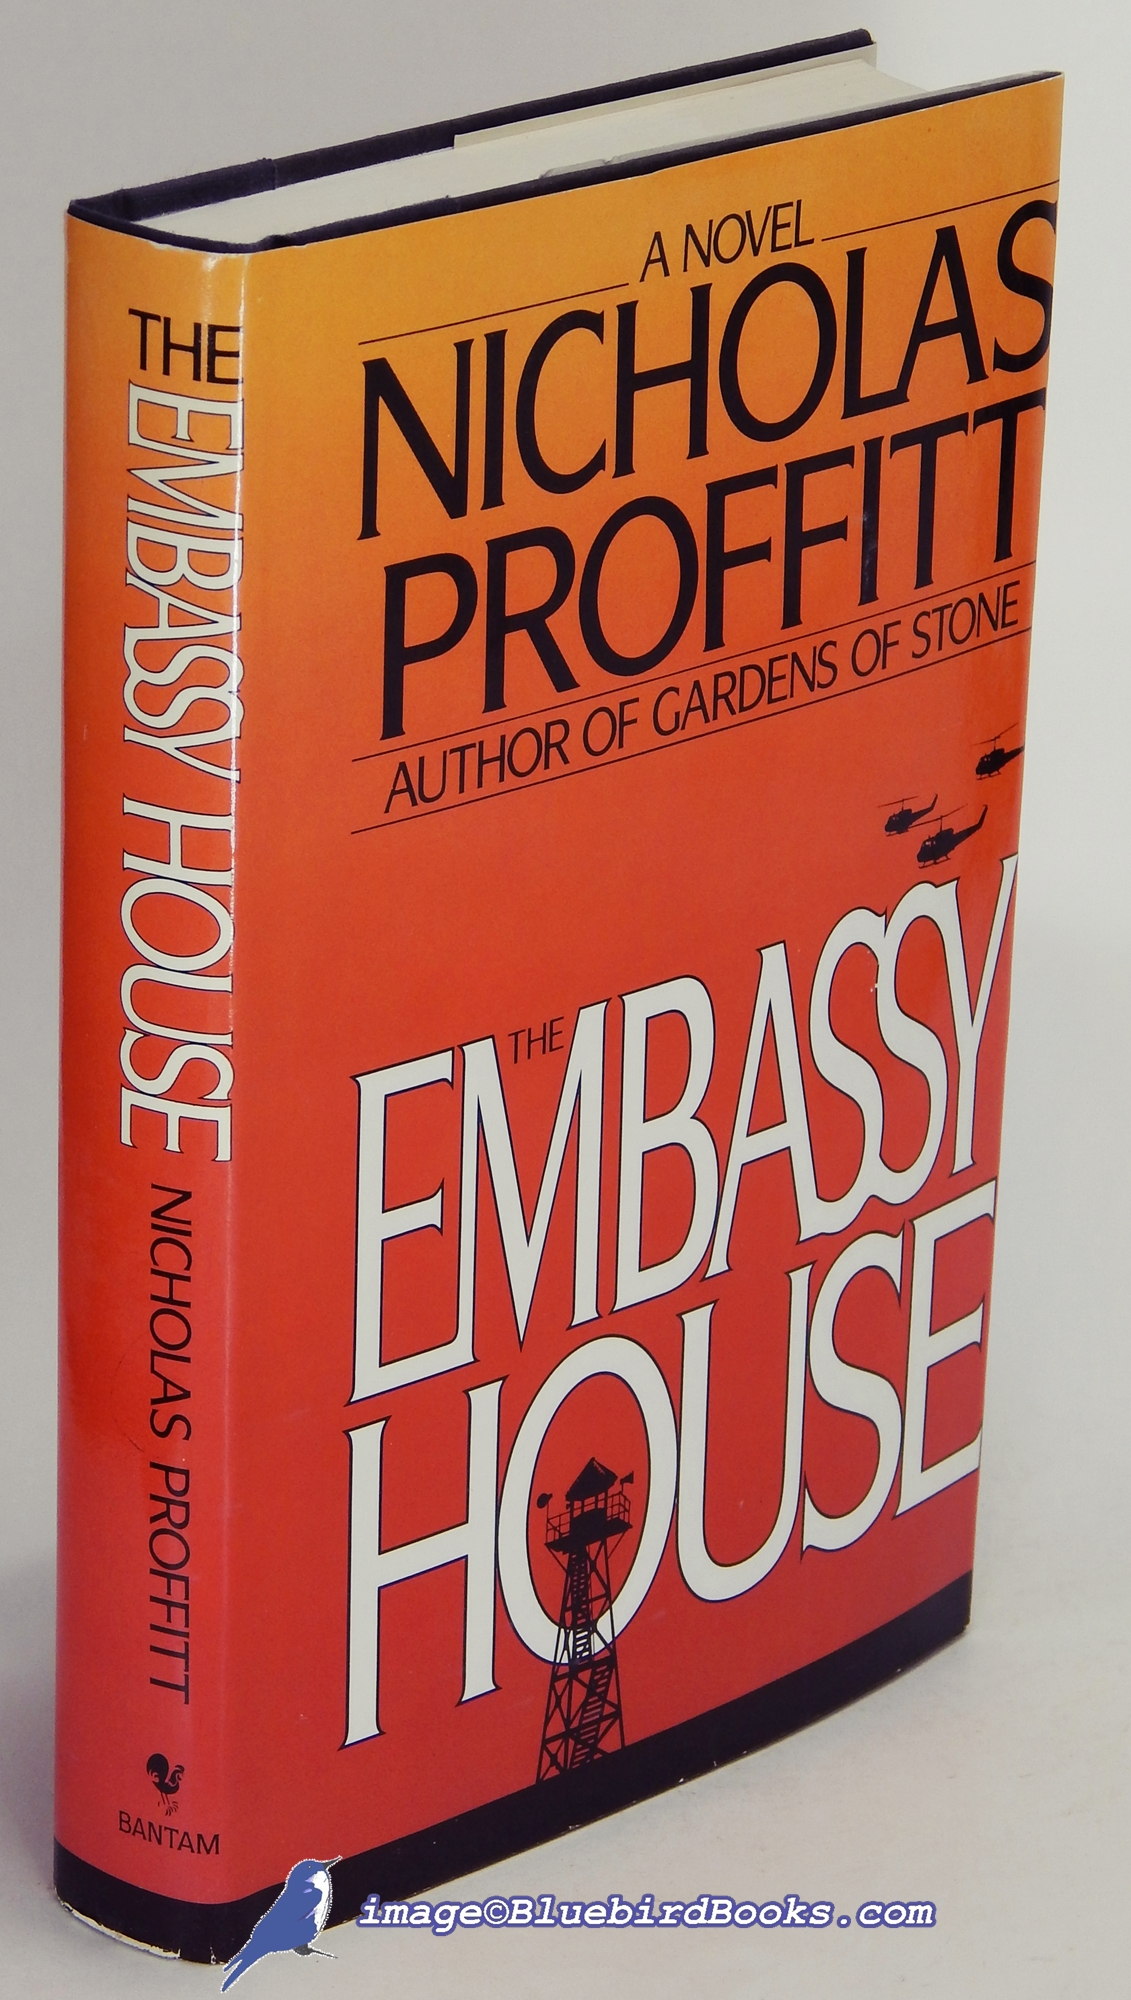 PROFFITT, NICHOLAS - The Embassy House